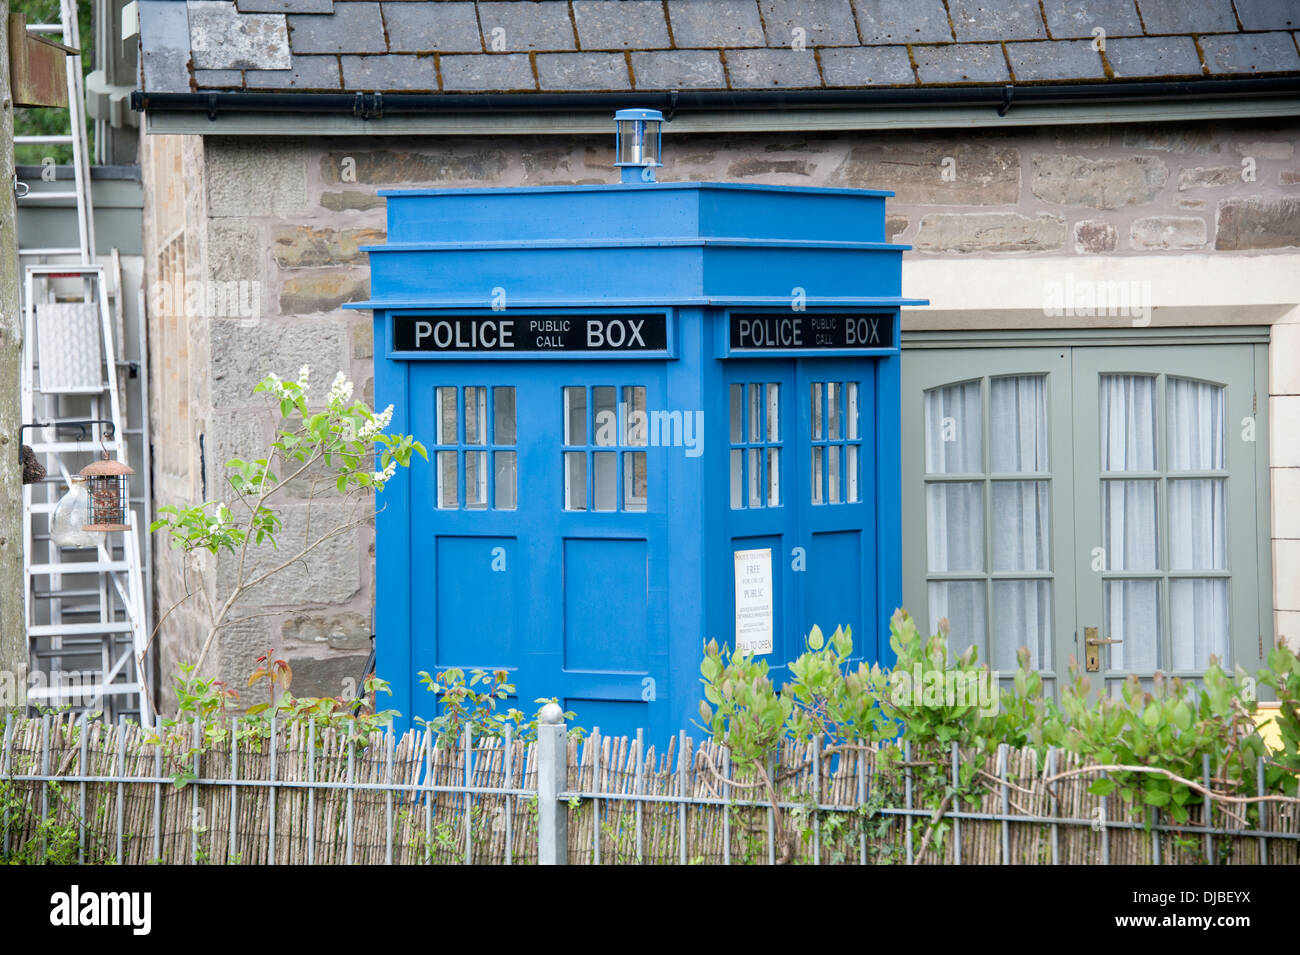 Dr Who Tardis Police Box Replica in house garden lifesize Stock Photo